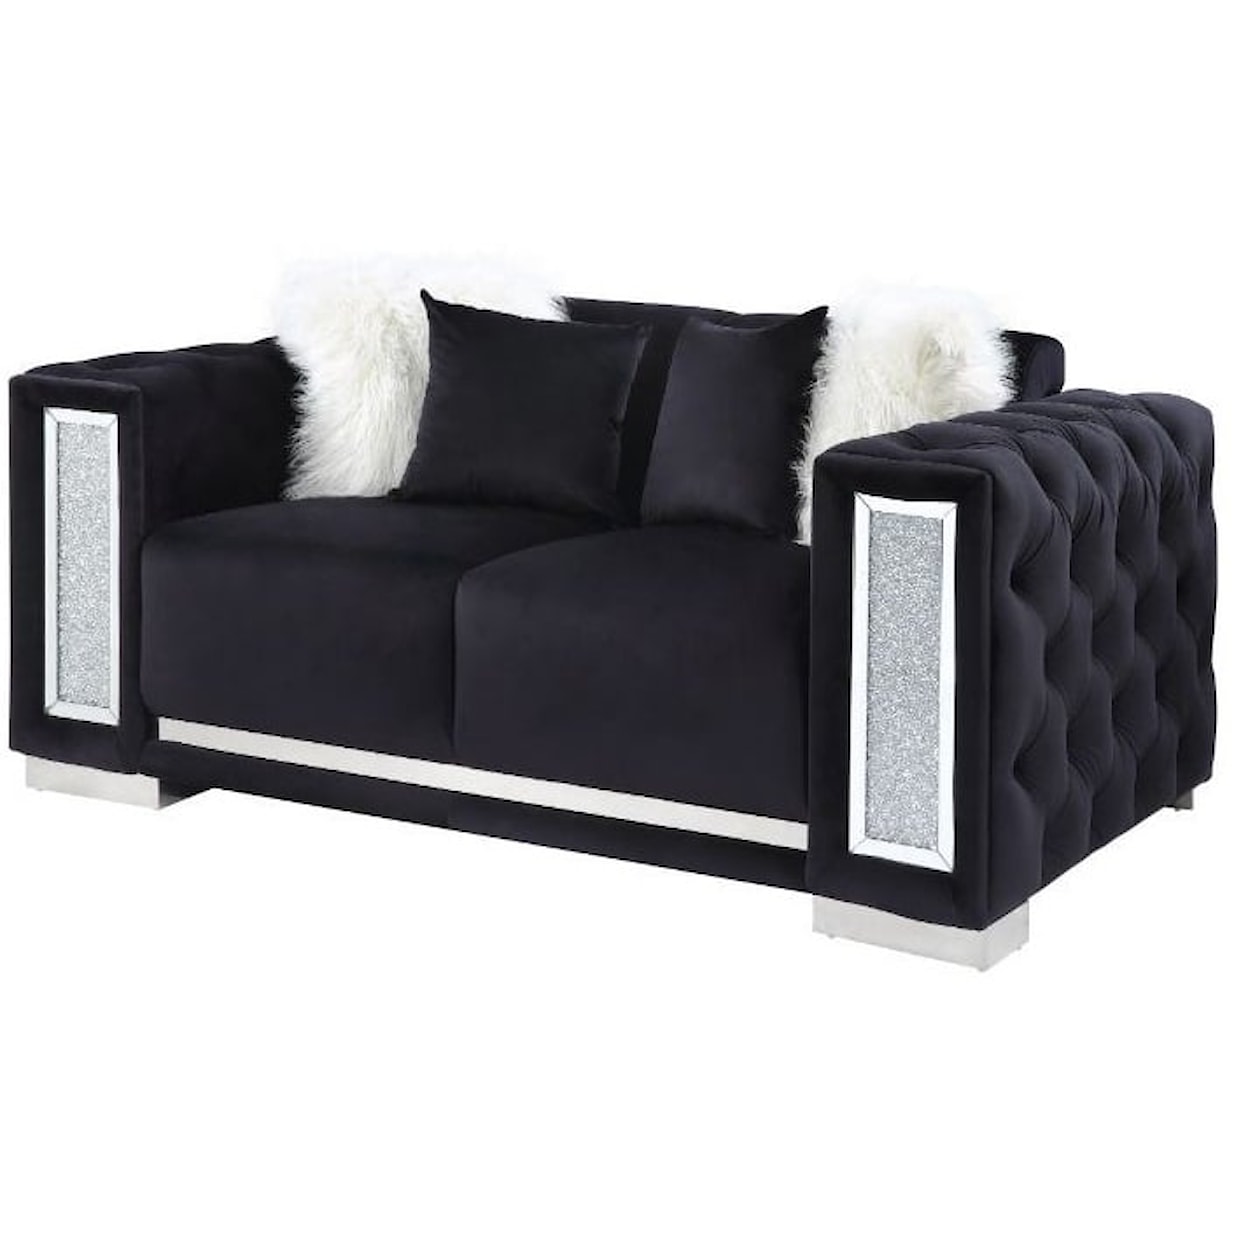 Acme Furniture Trislar Loveseat W/4 Pillows (Same Lv01398)